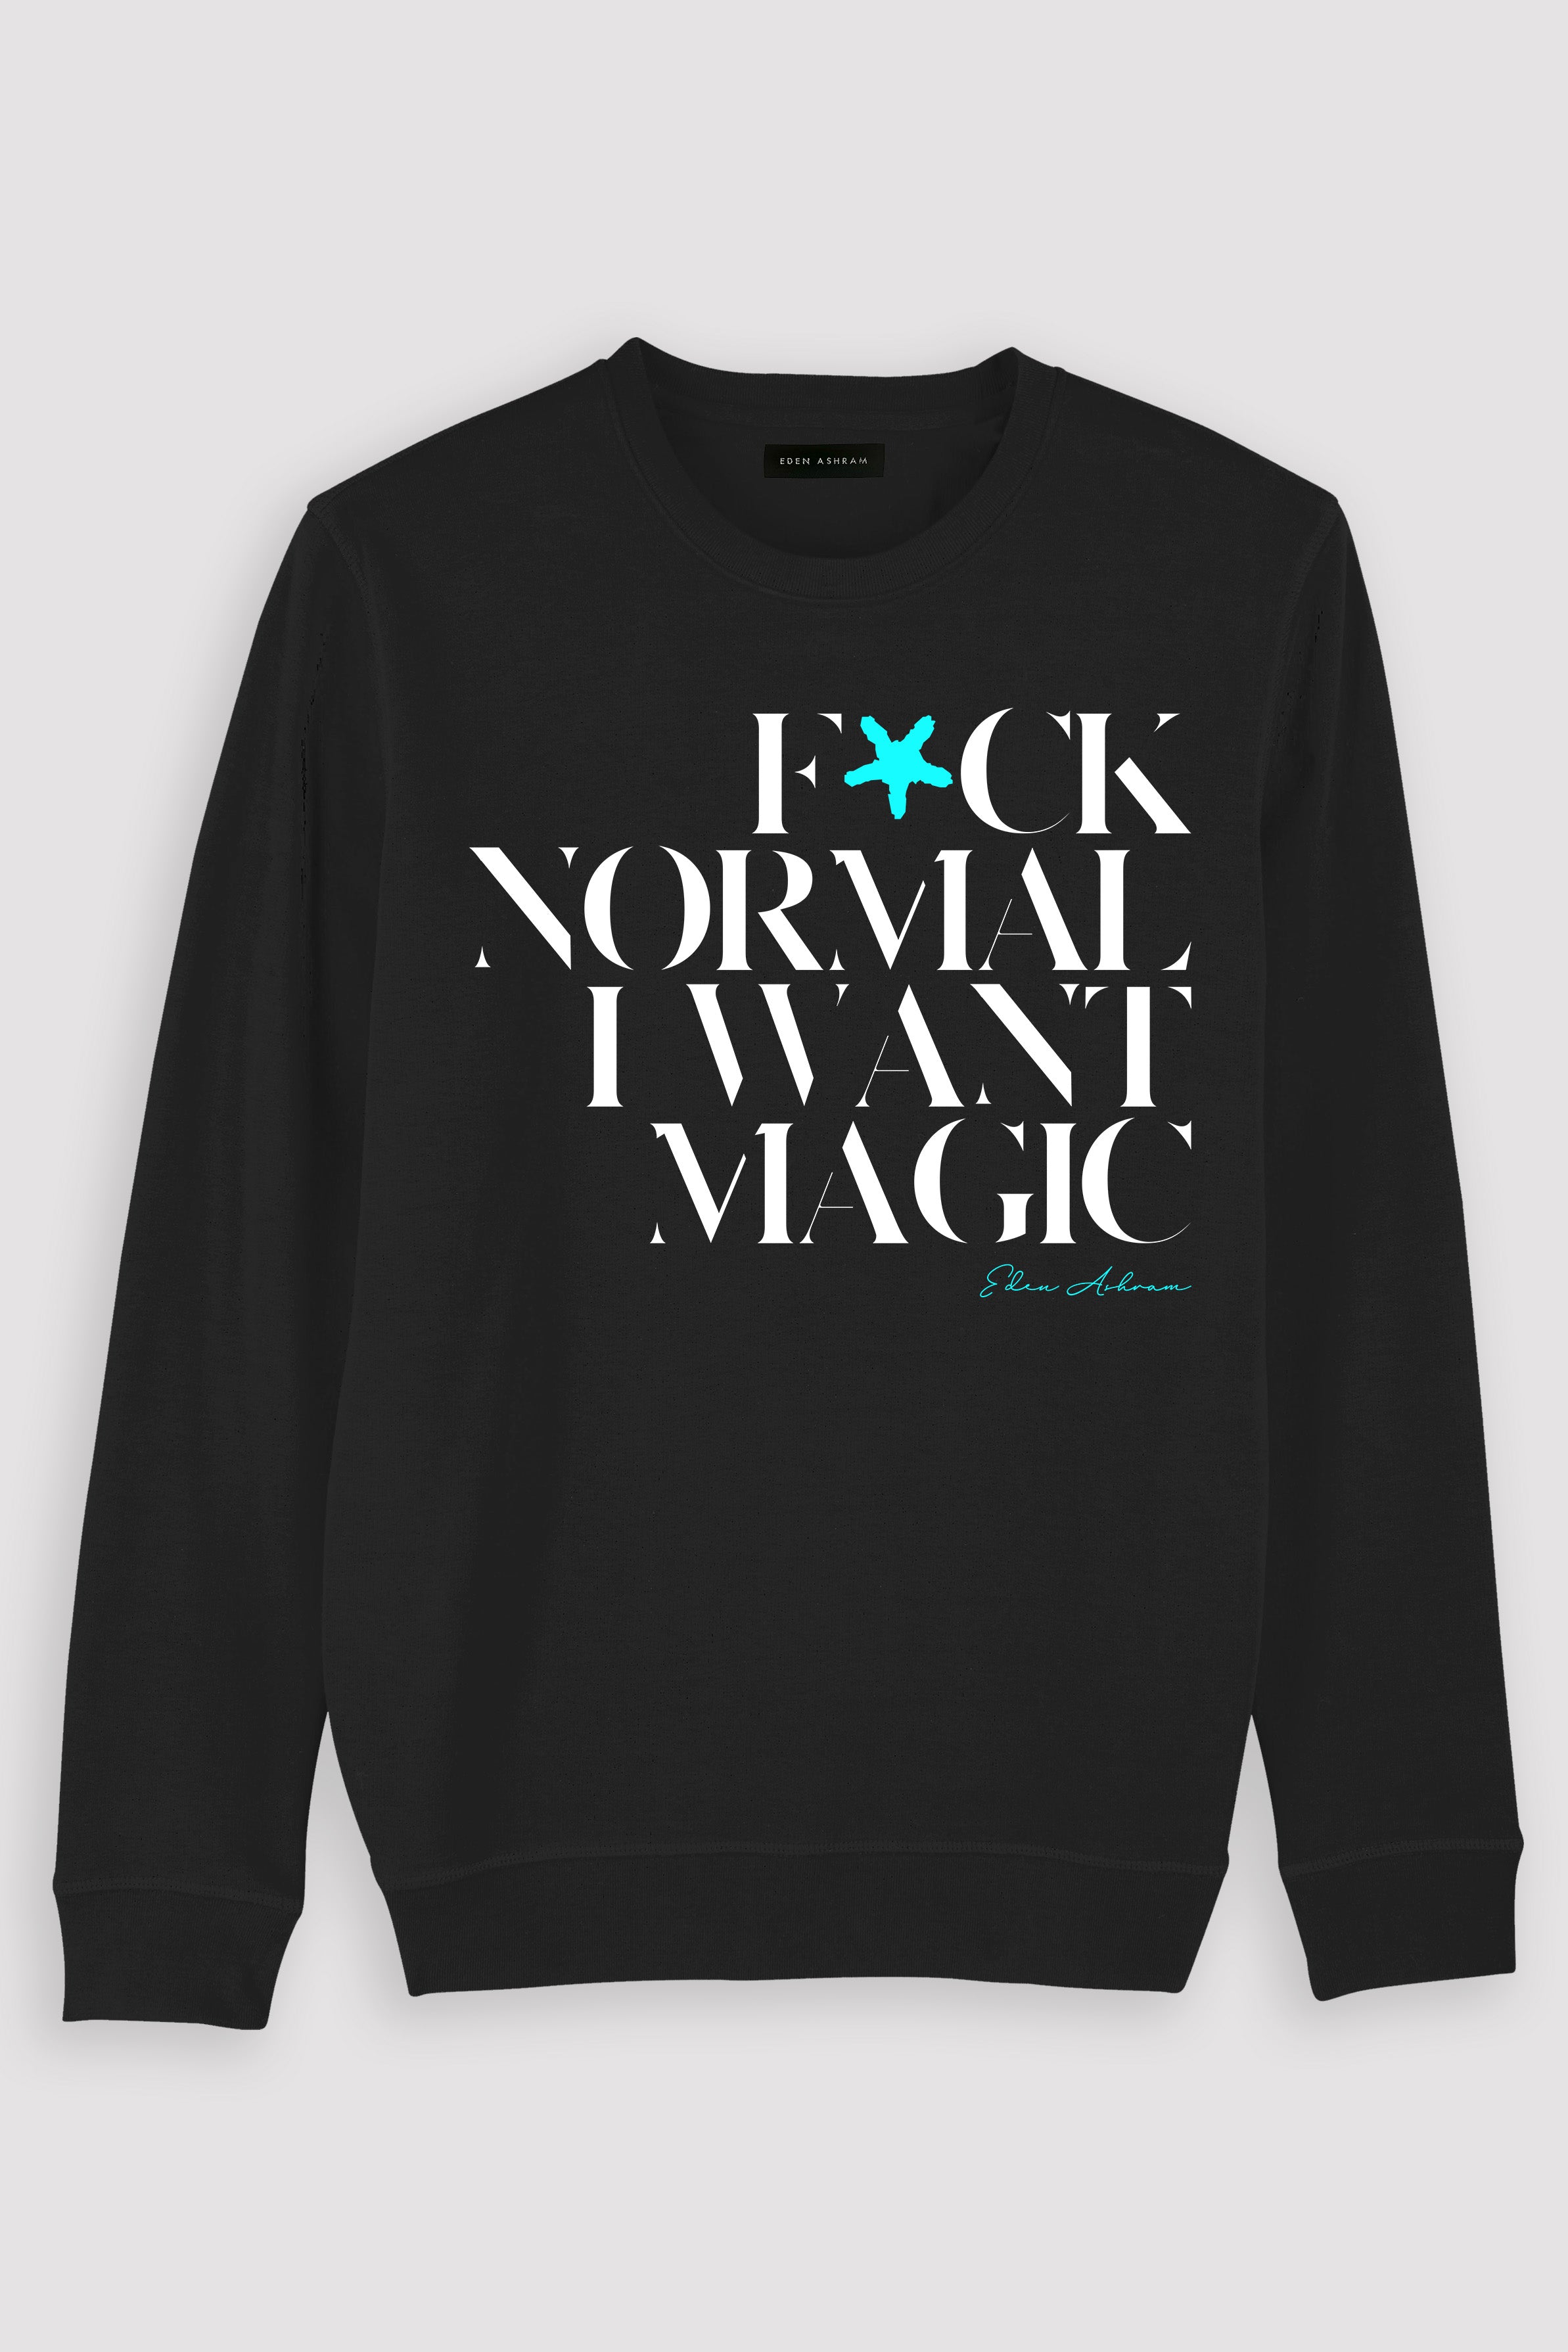 EDEN ASHRAM F*ck Normal I Want Magic Premium Crew Neck Sweatshirt Vintage Black